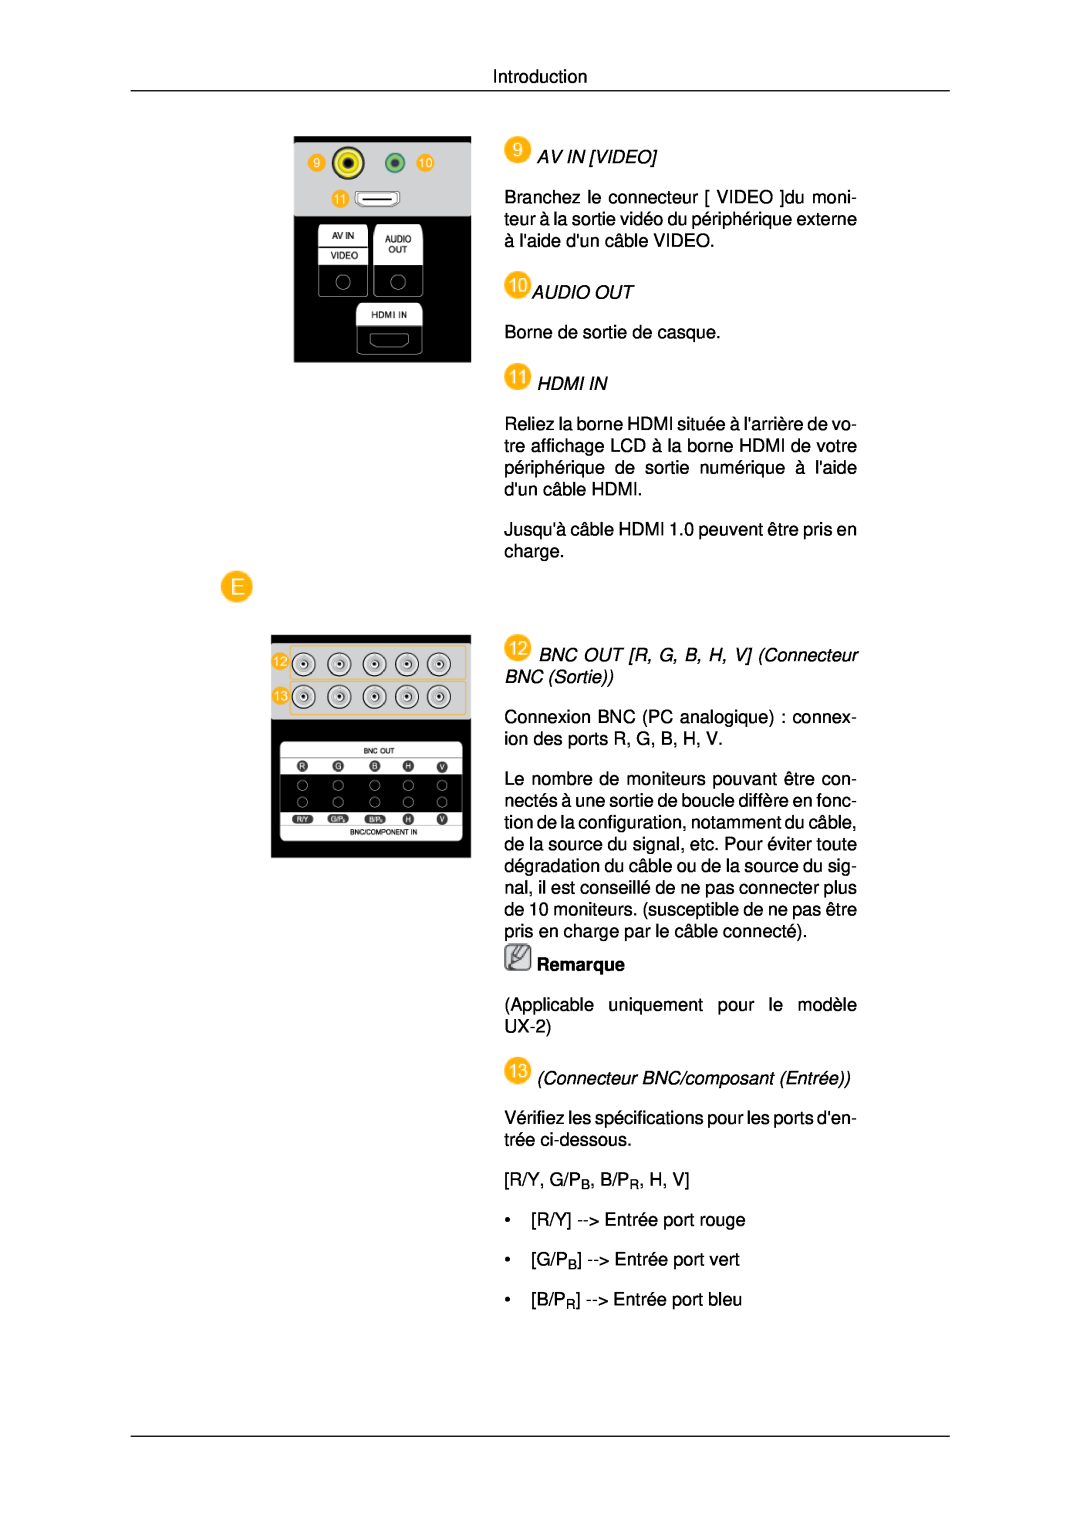 Samsung LH40MRTLBC/EN manual Av In Video, Audio Out, Hdmi In, BNC OUT R, G, B, H, V Connecteur BNC Sortie, Remarque 